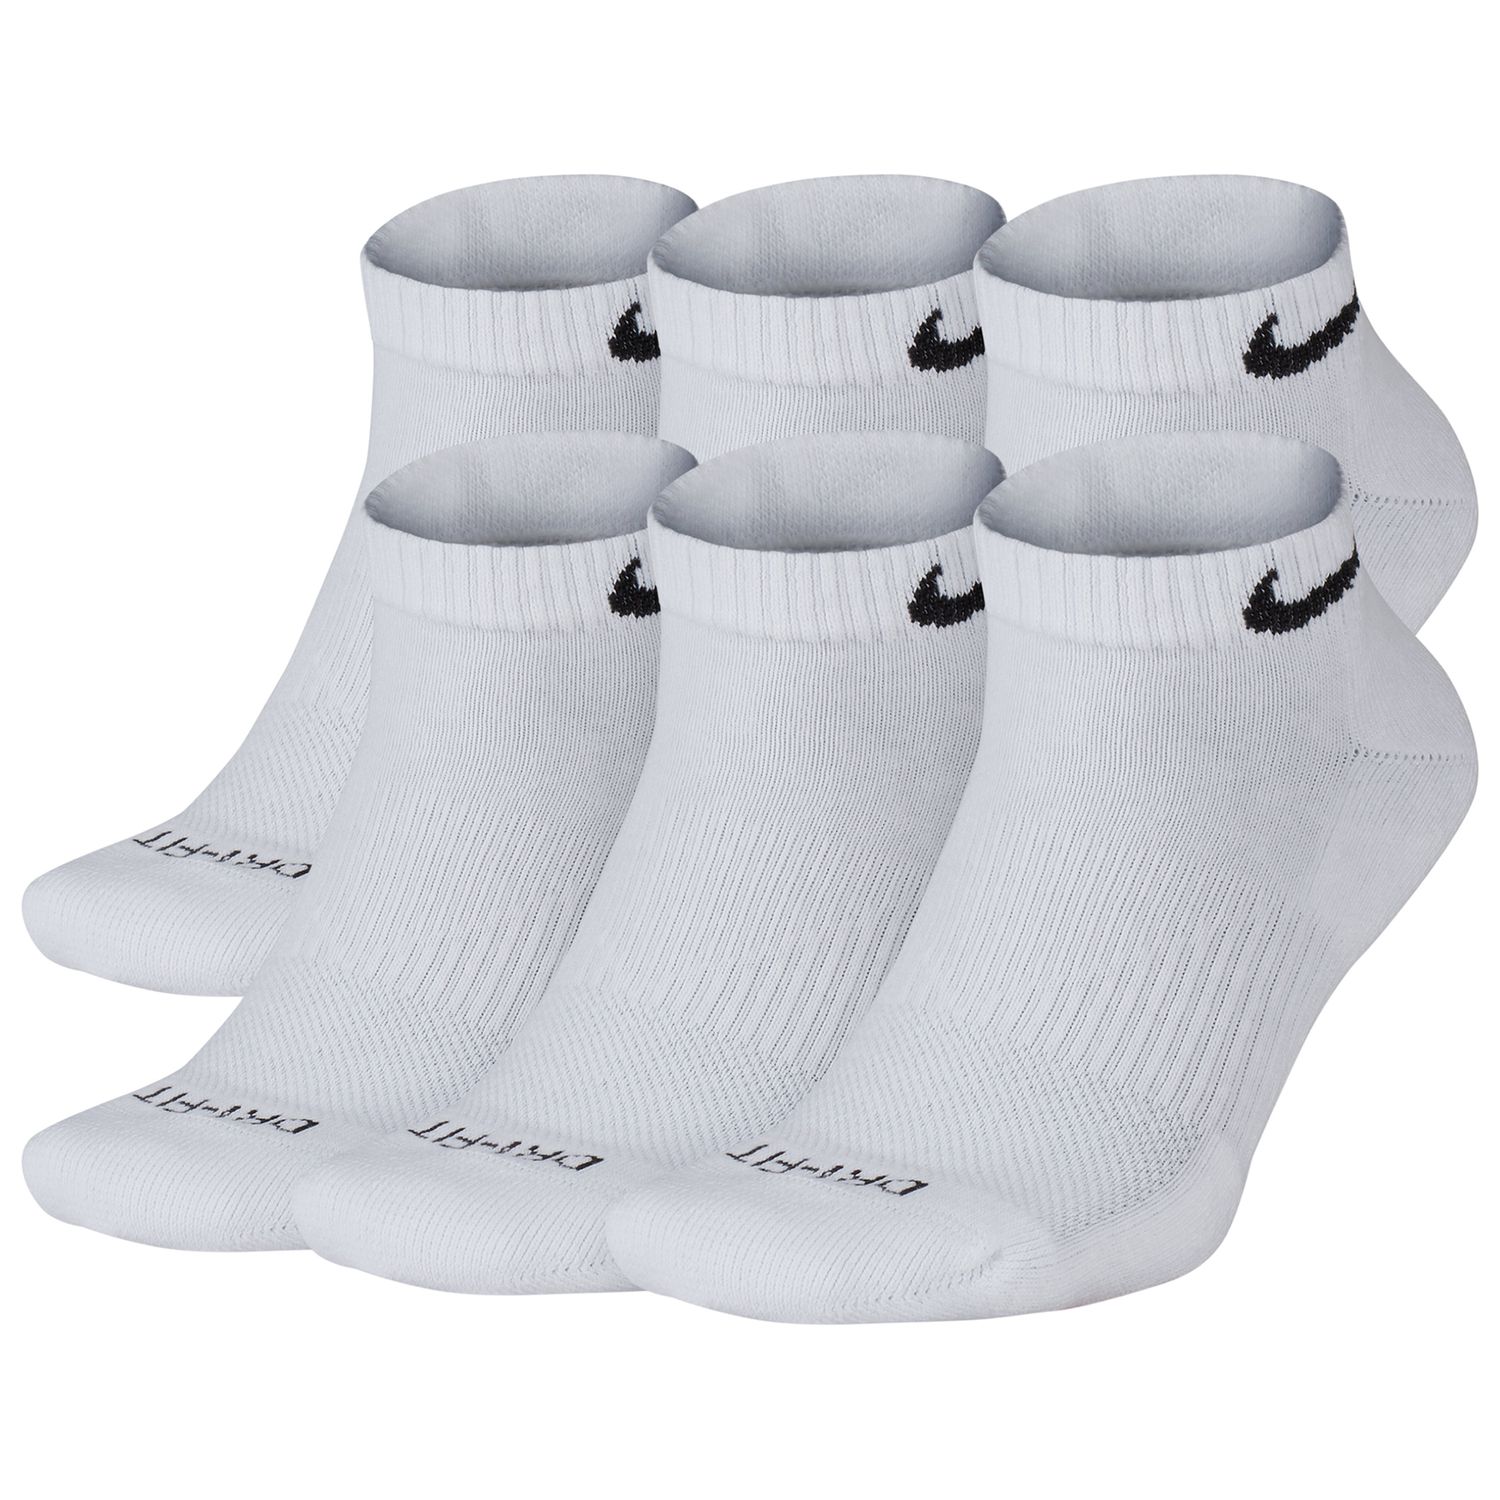 6 pair nike socks